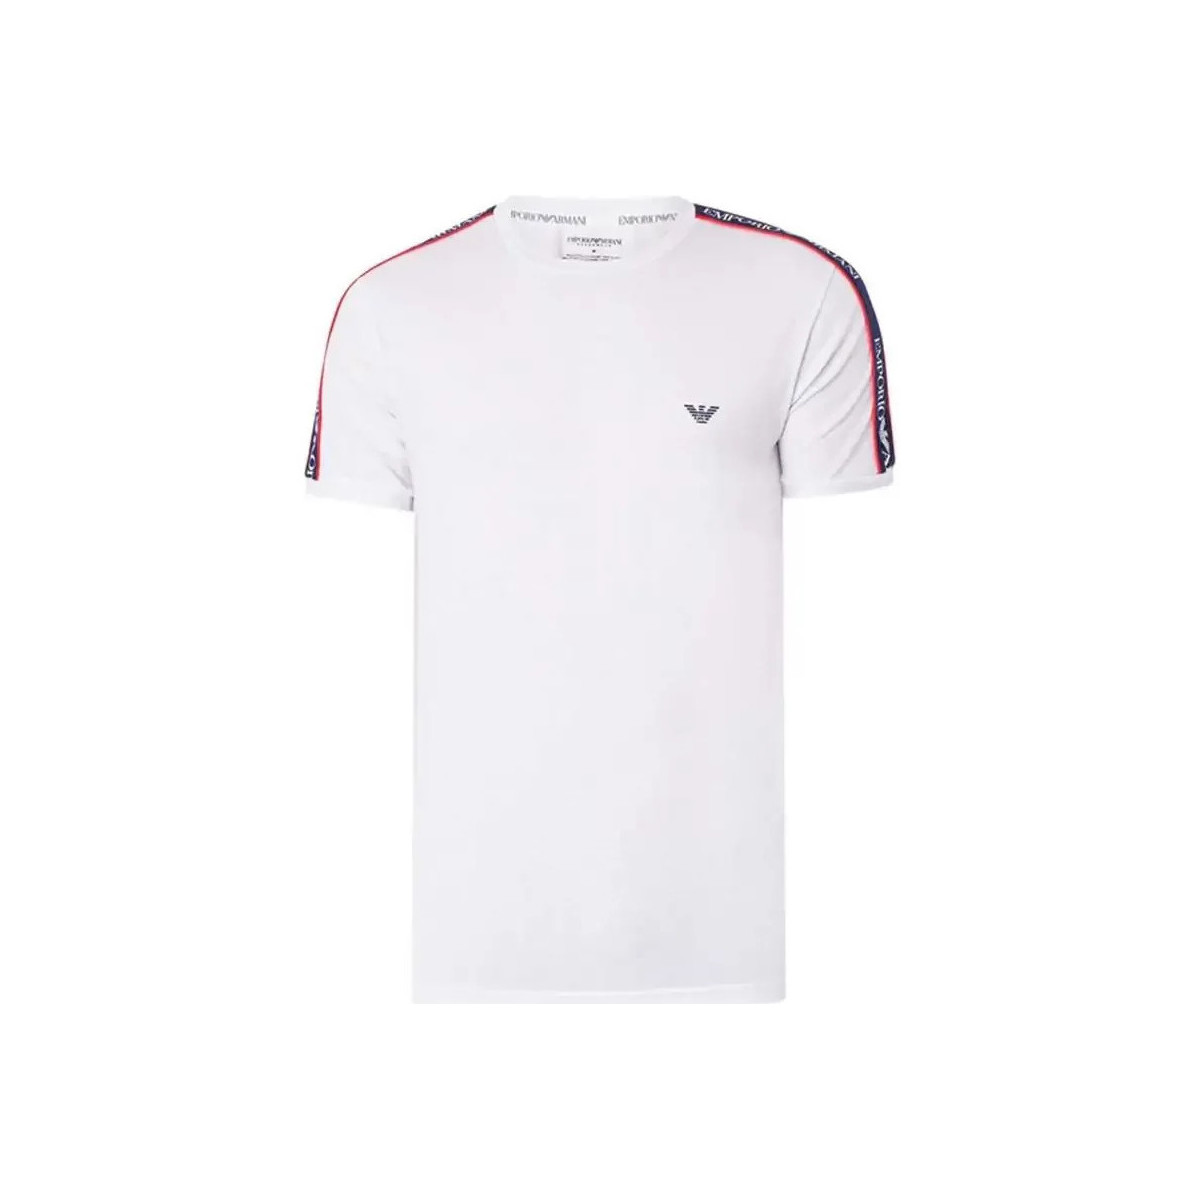 Vêtements Homme Shorts / Bermudas Emporio Armani Mini logo Blanc